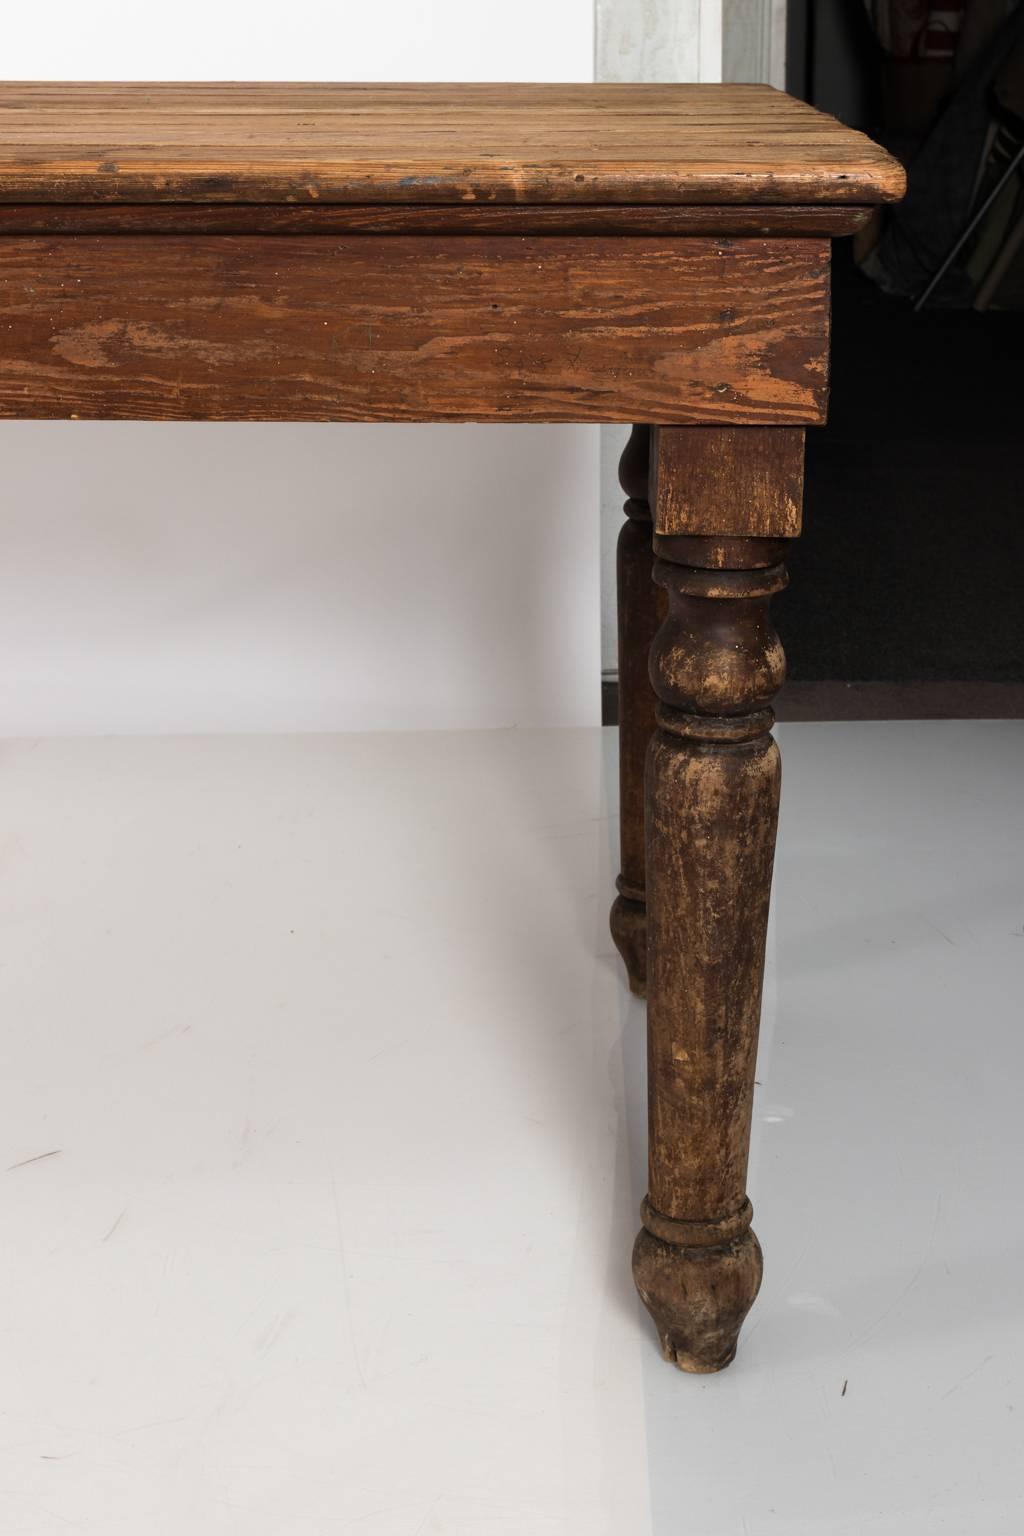 Late 19th English Century Rustic Pine Board Farm Table 10